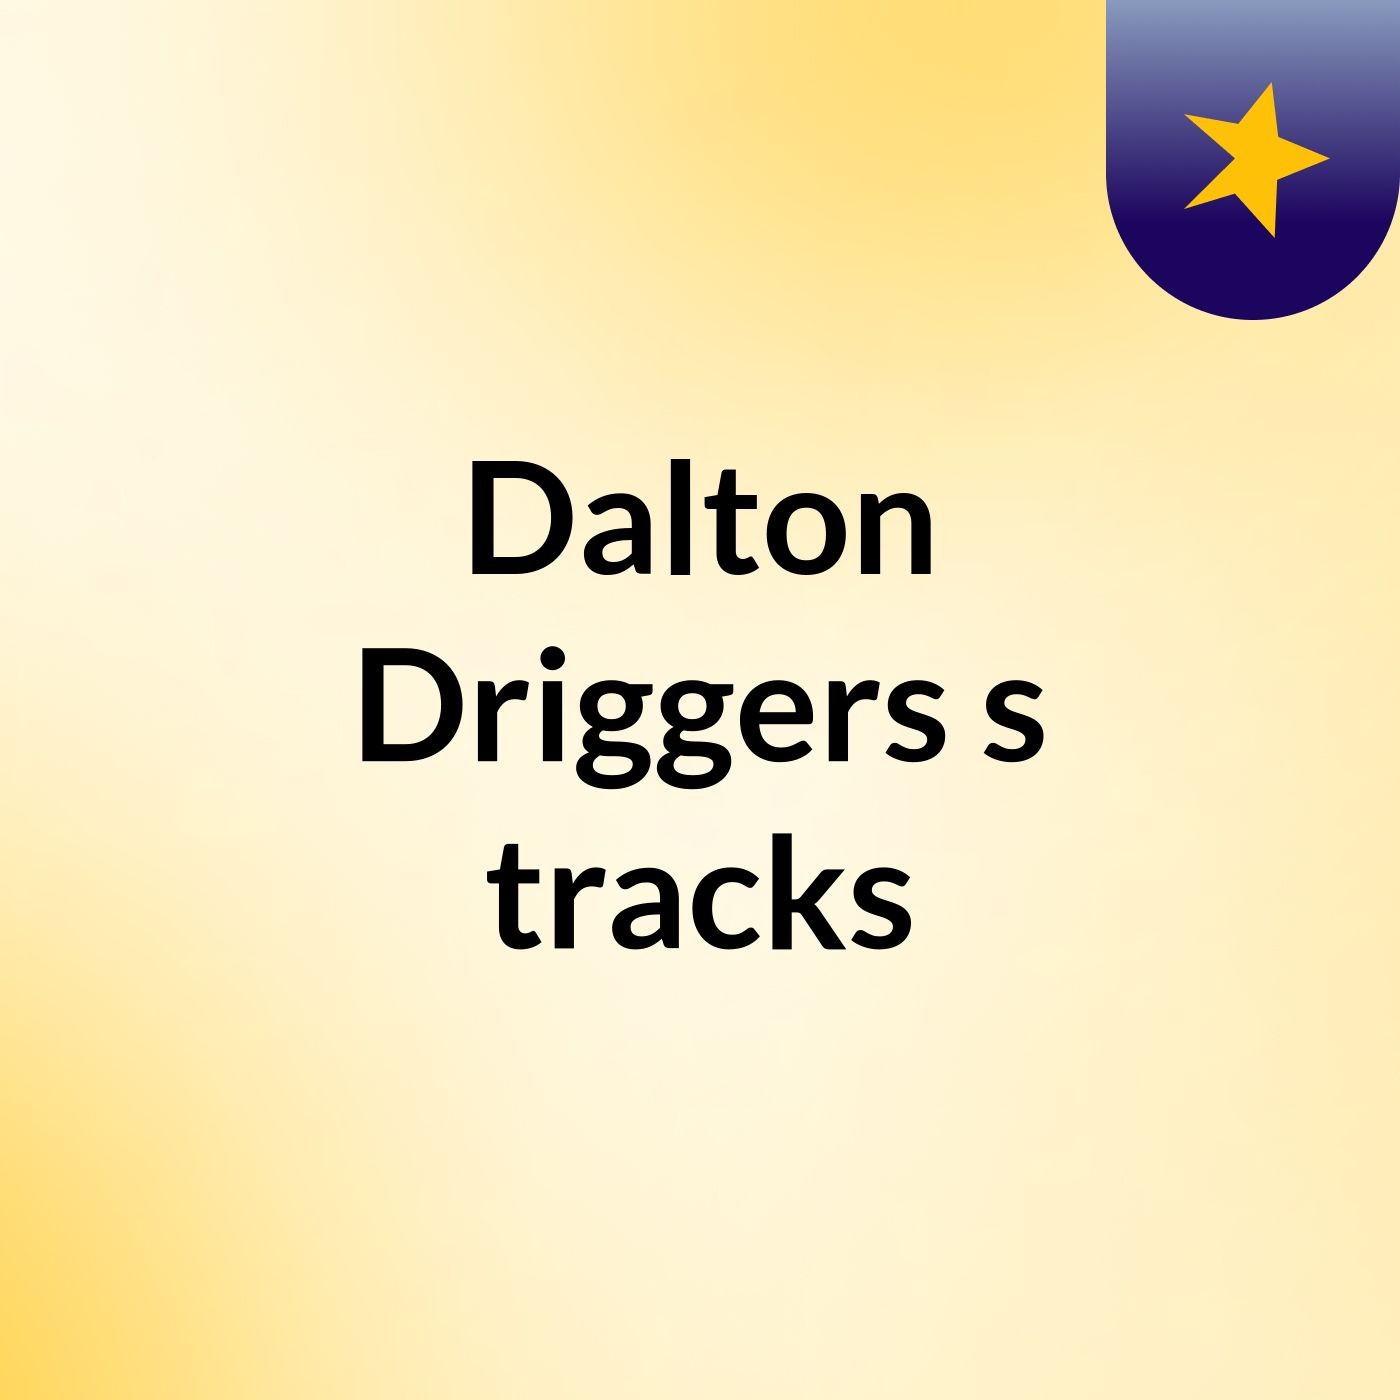 Dalton Driggers's tracks